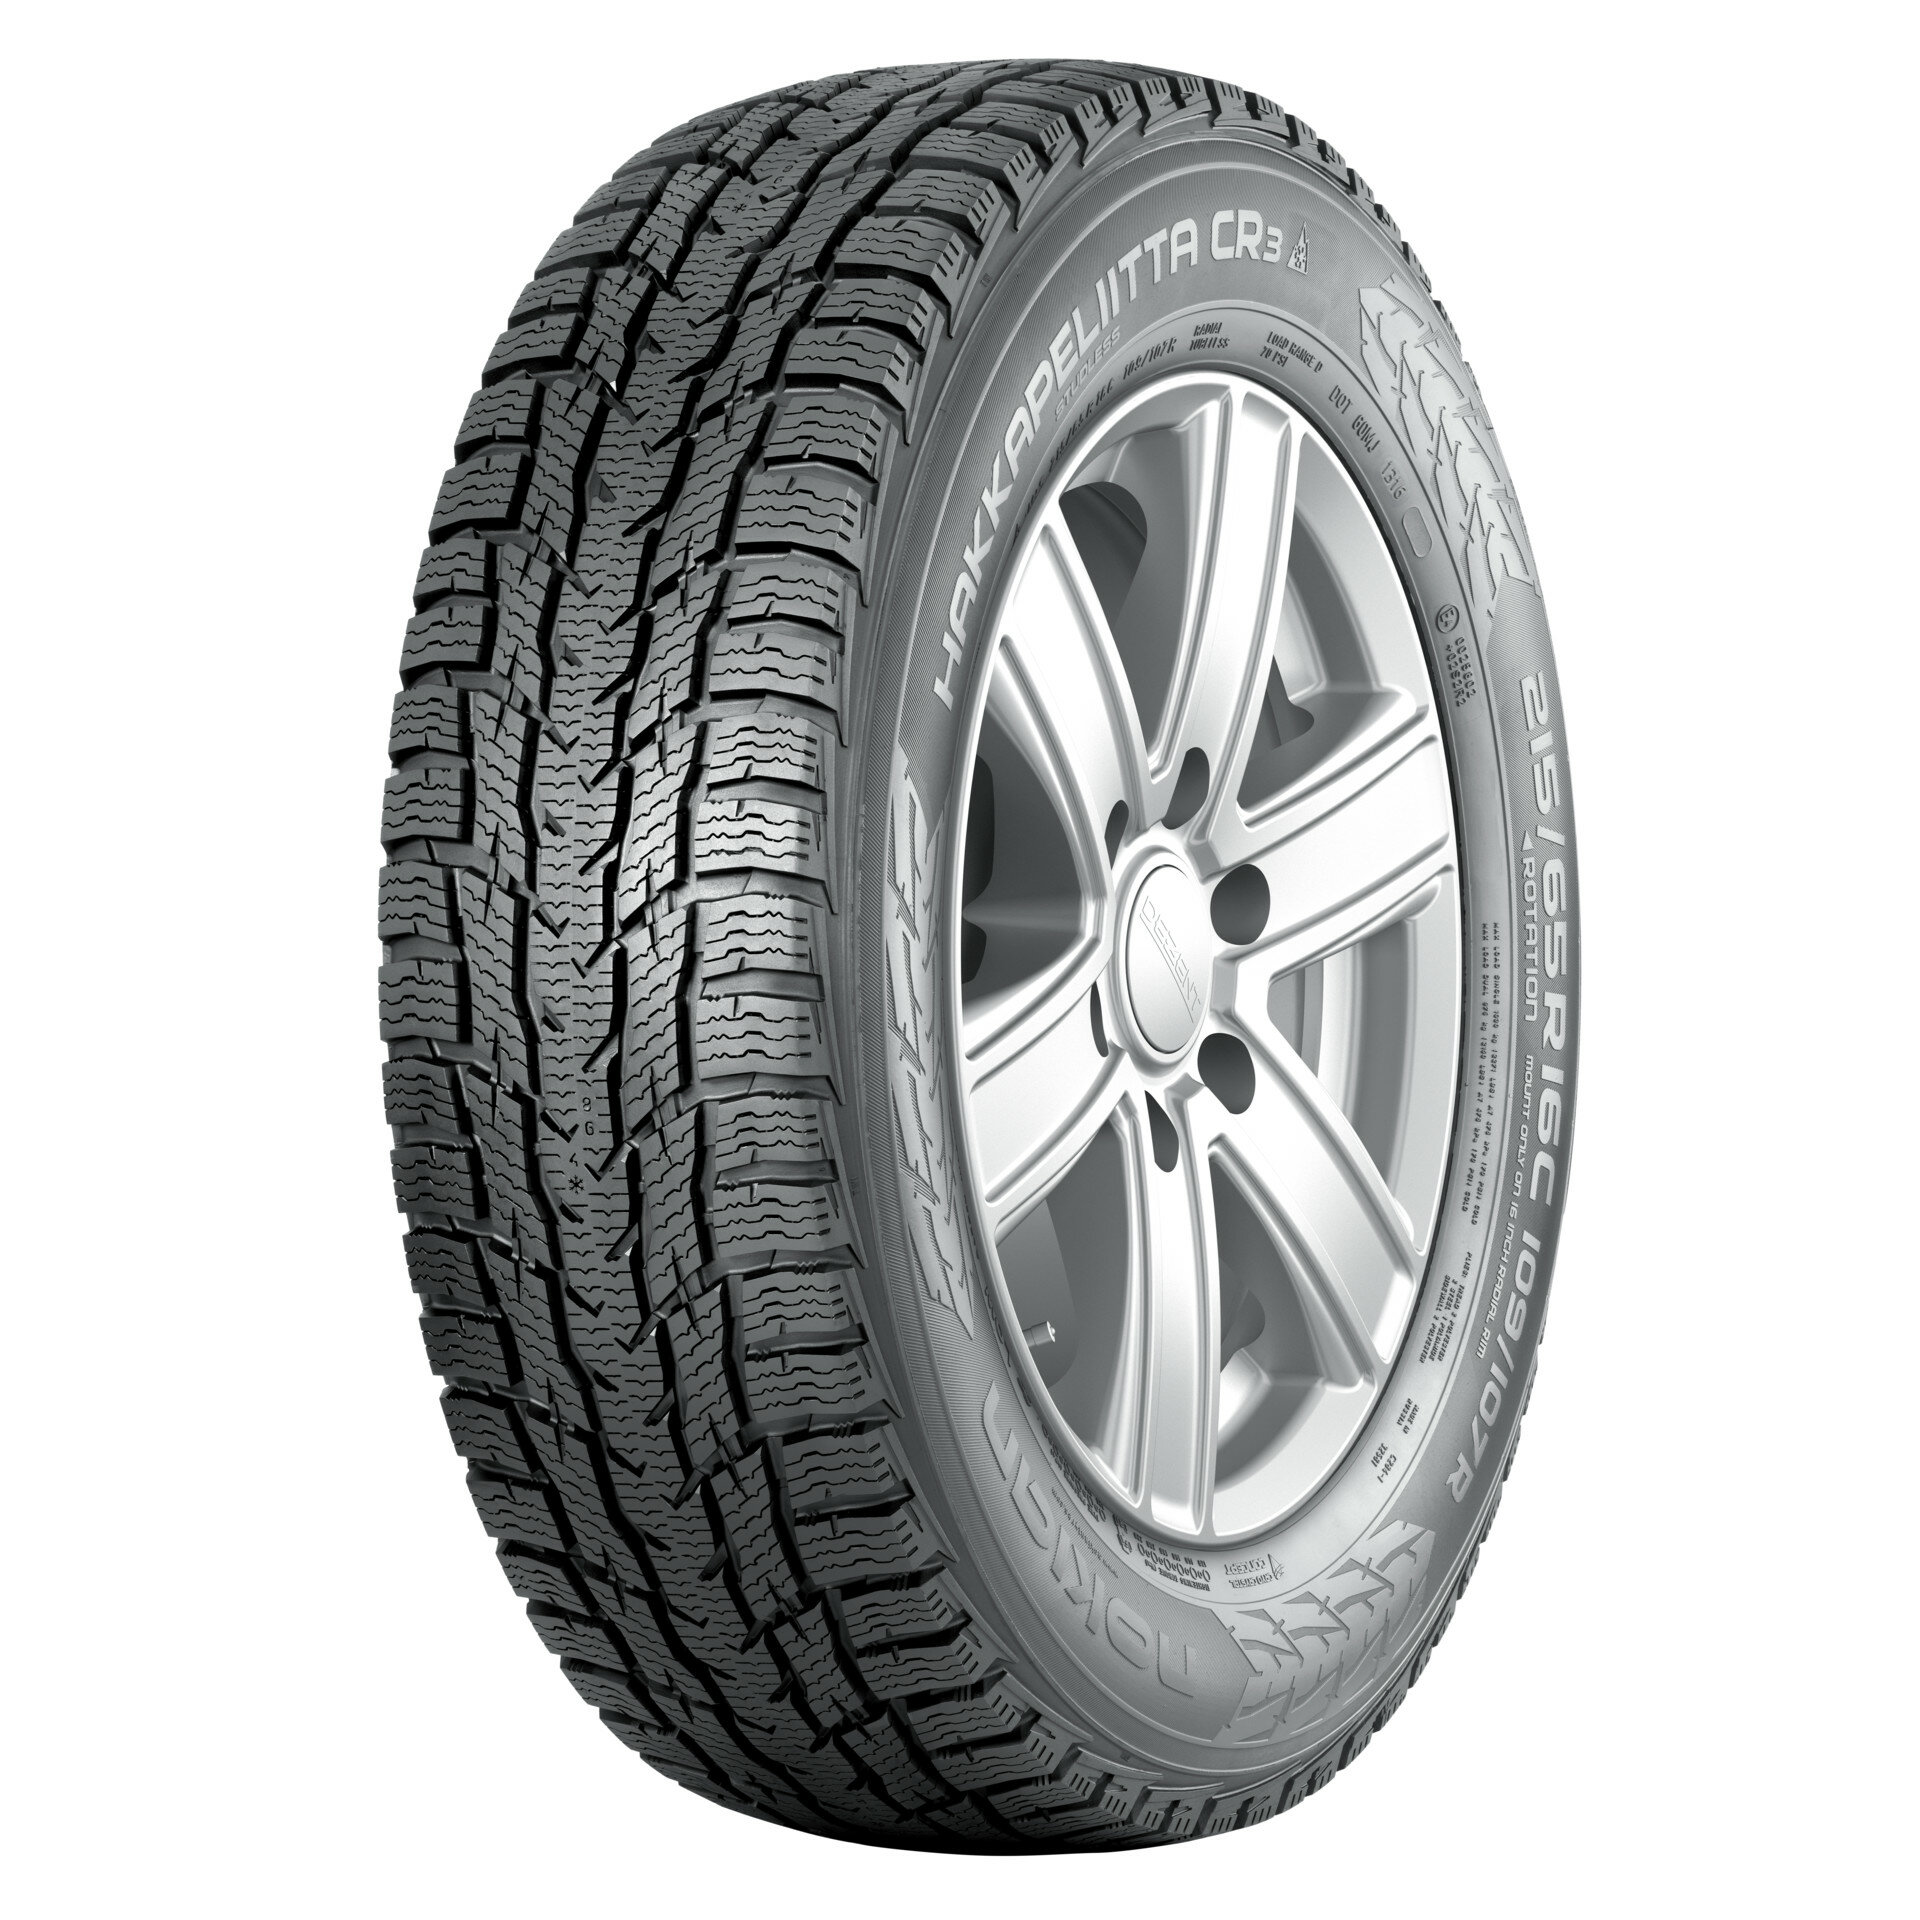 Зимние шины Nokian Tyres Hakkapeliitta CR3 205/65 R16C 107/106R